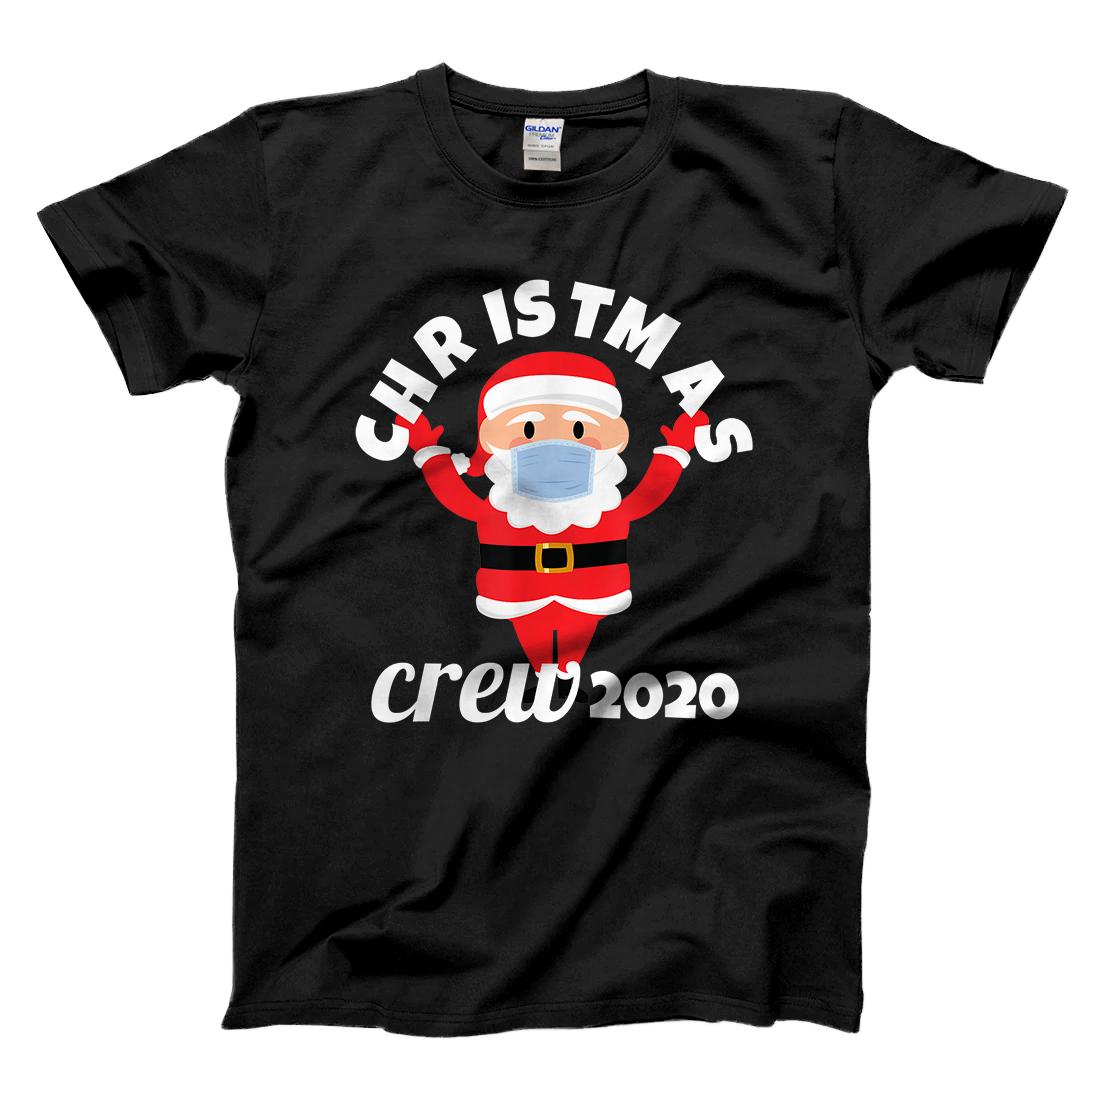 Personalized Christmas Crew 2020 Funny Mask Wearing Santa T-Shirt